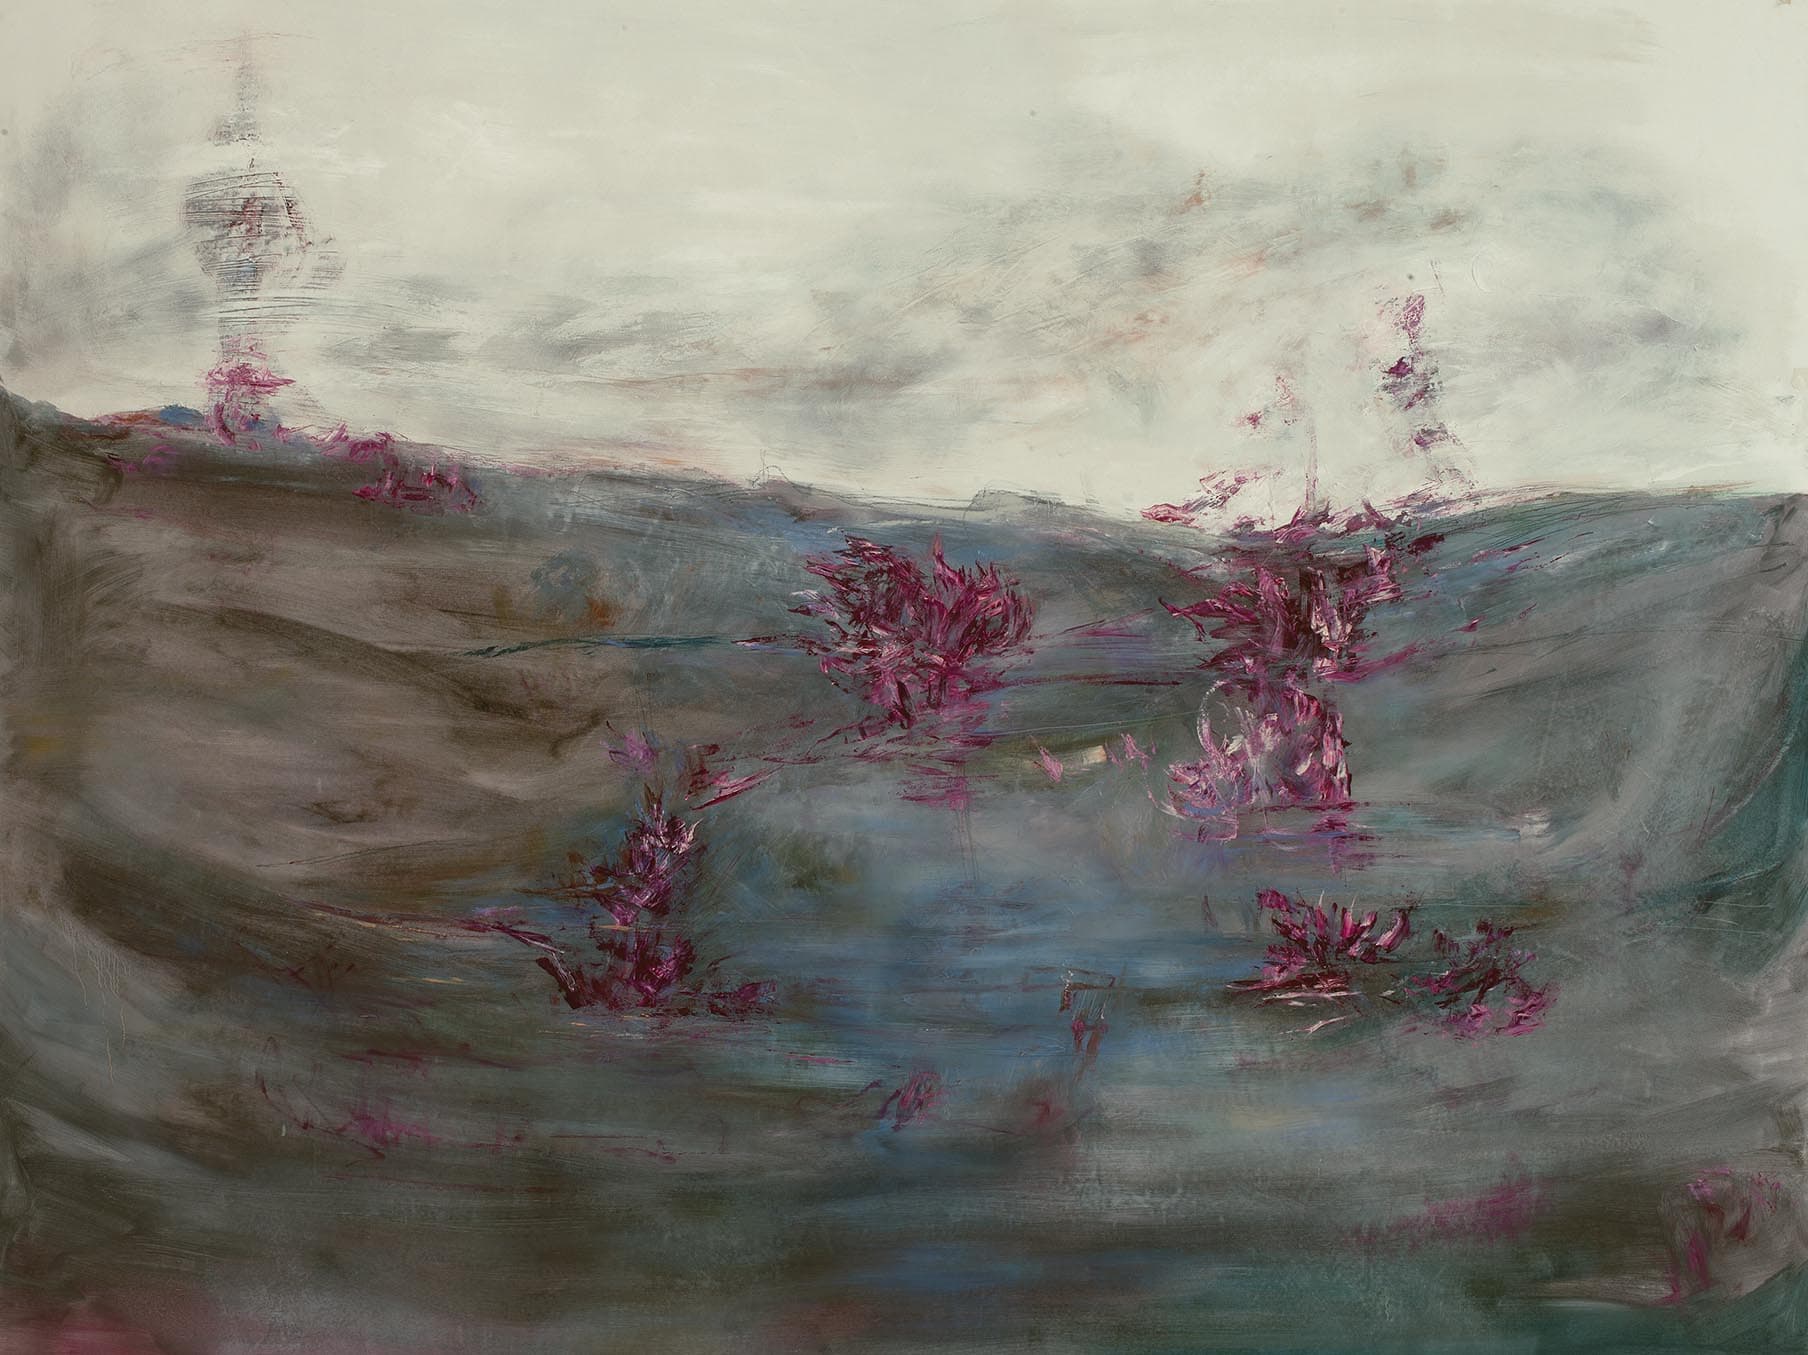 barbara-duran-water-flowers-#1-2019-oil-on-canvas-cm 200x150